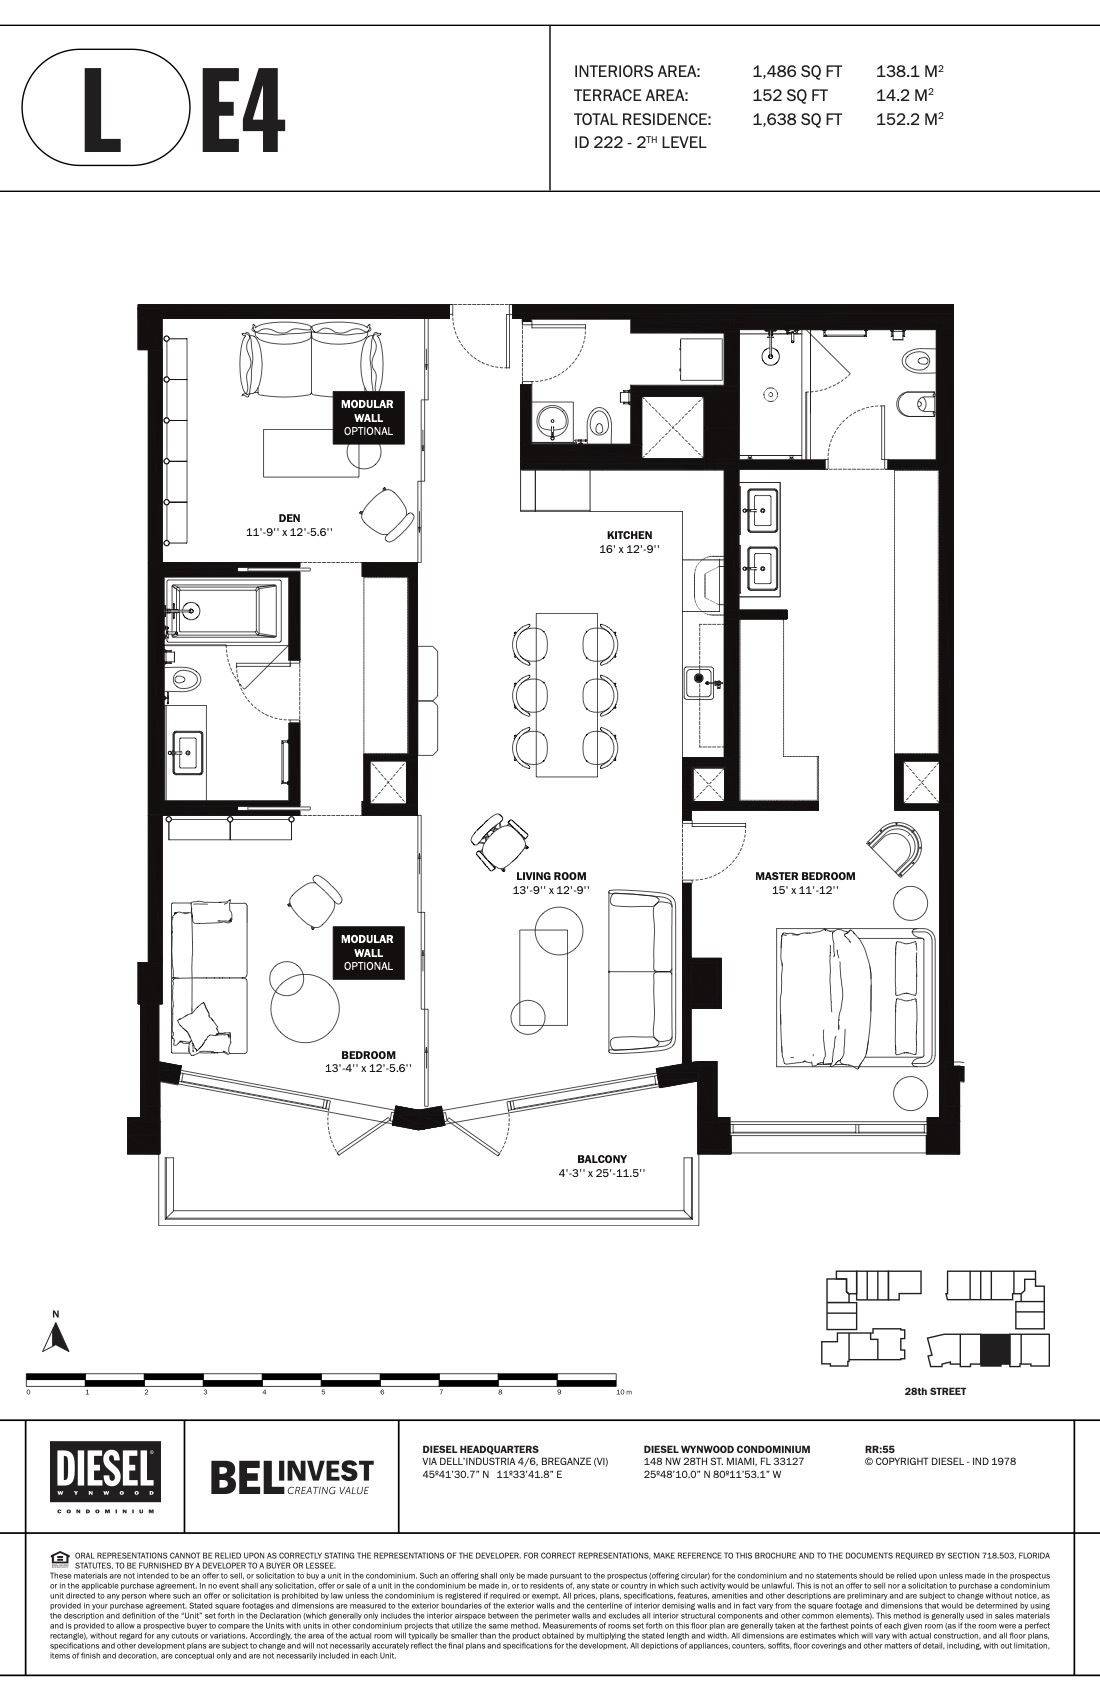 Floor Plan for Diesel Wynwood Floorplans, L E4